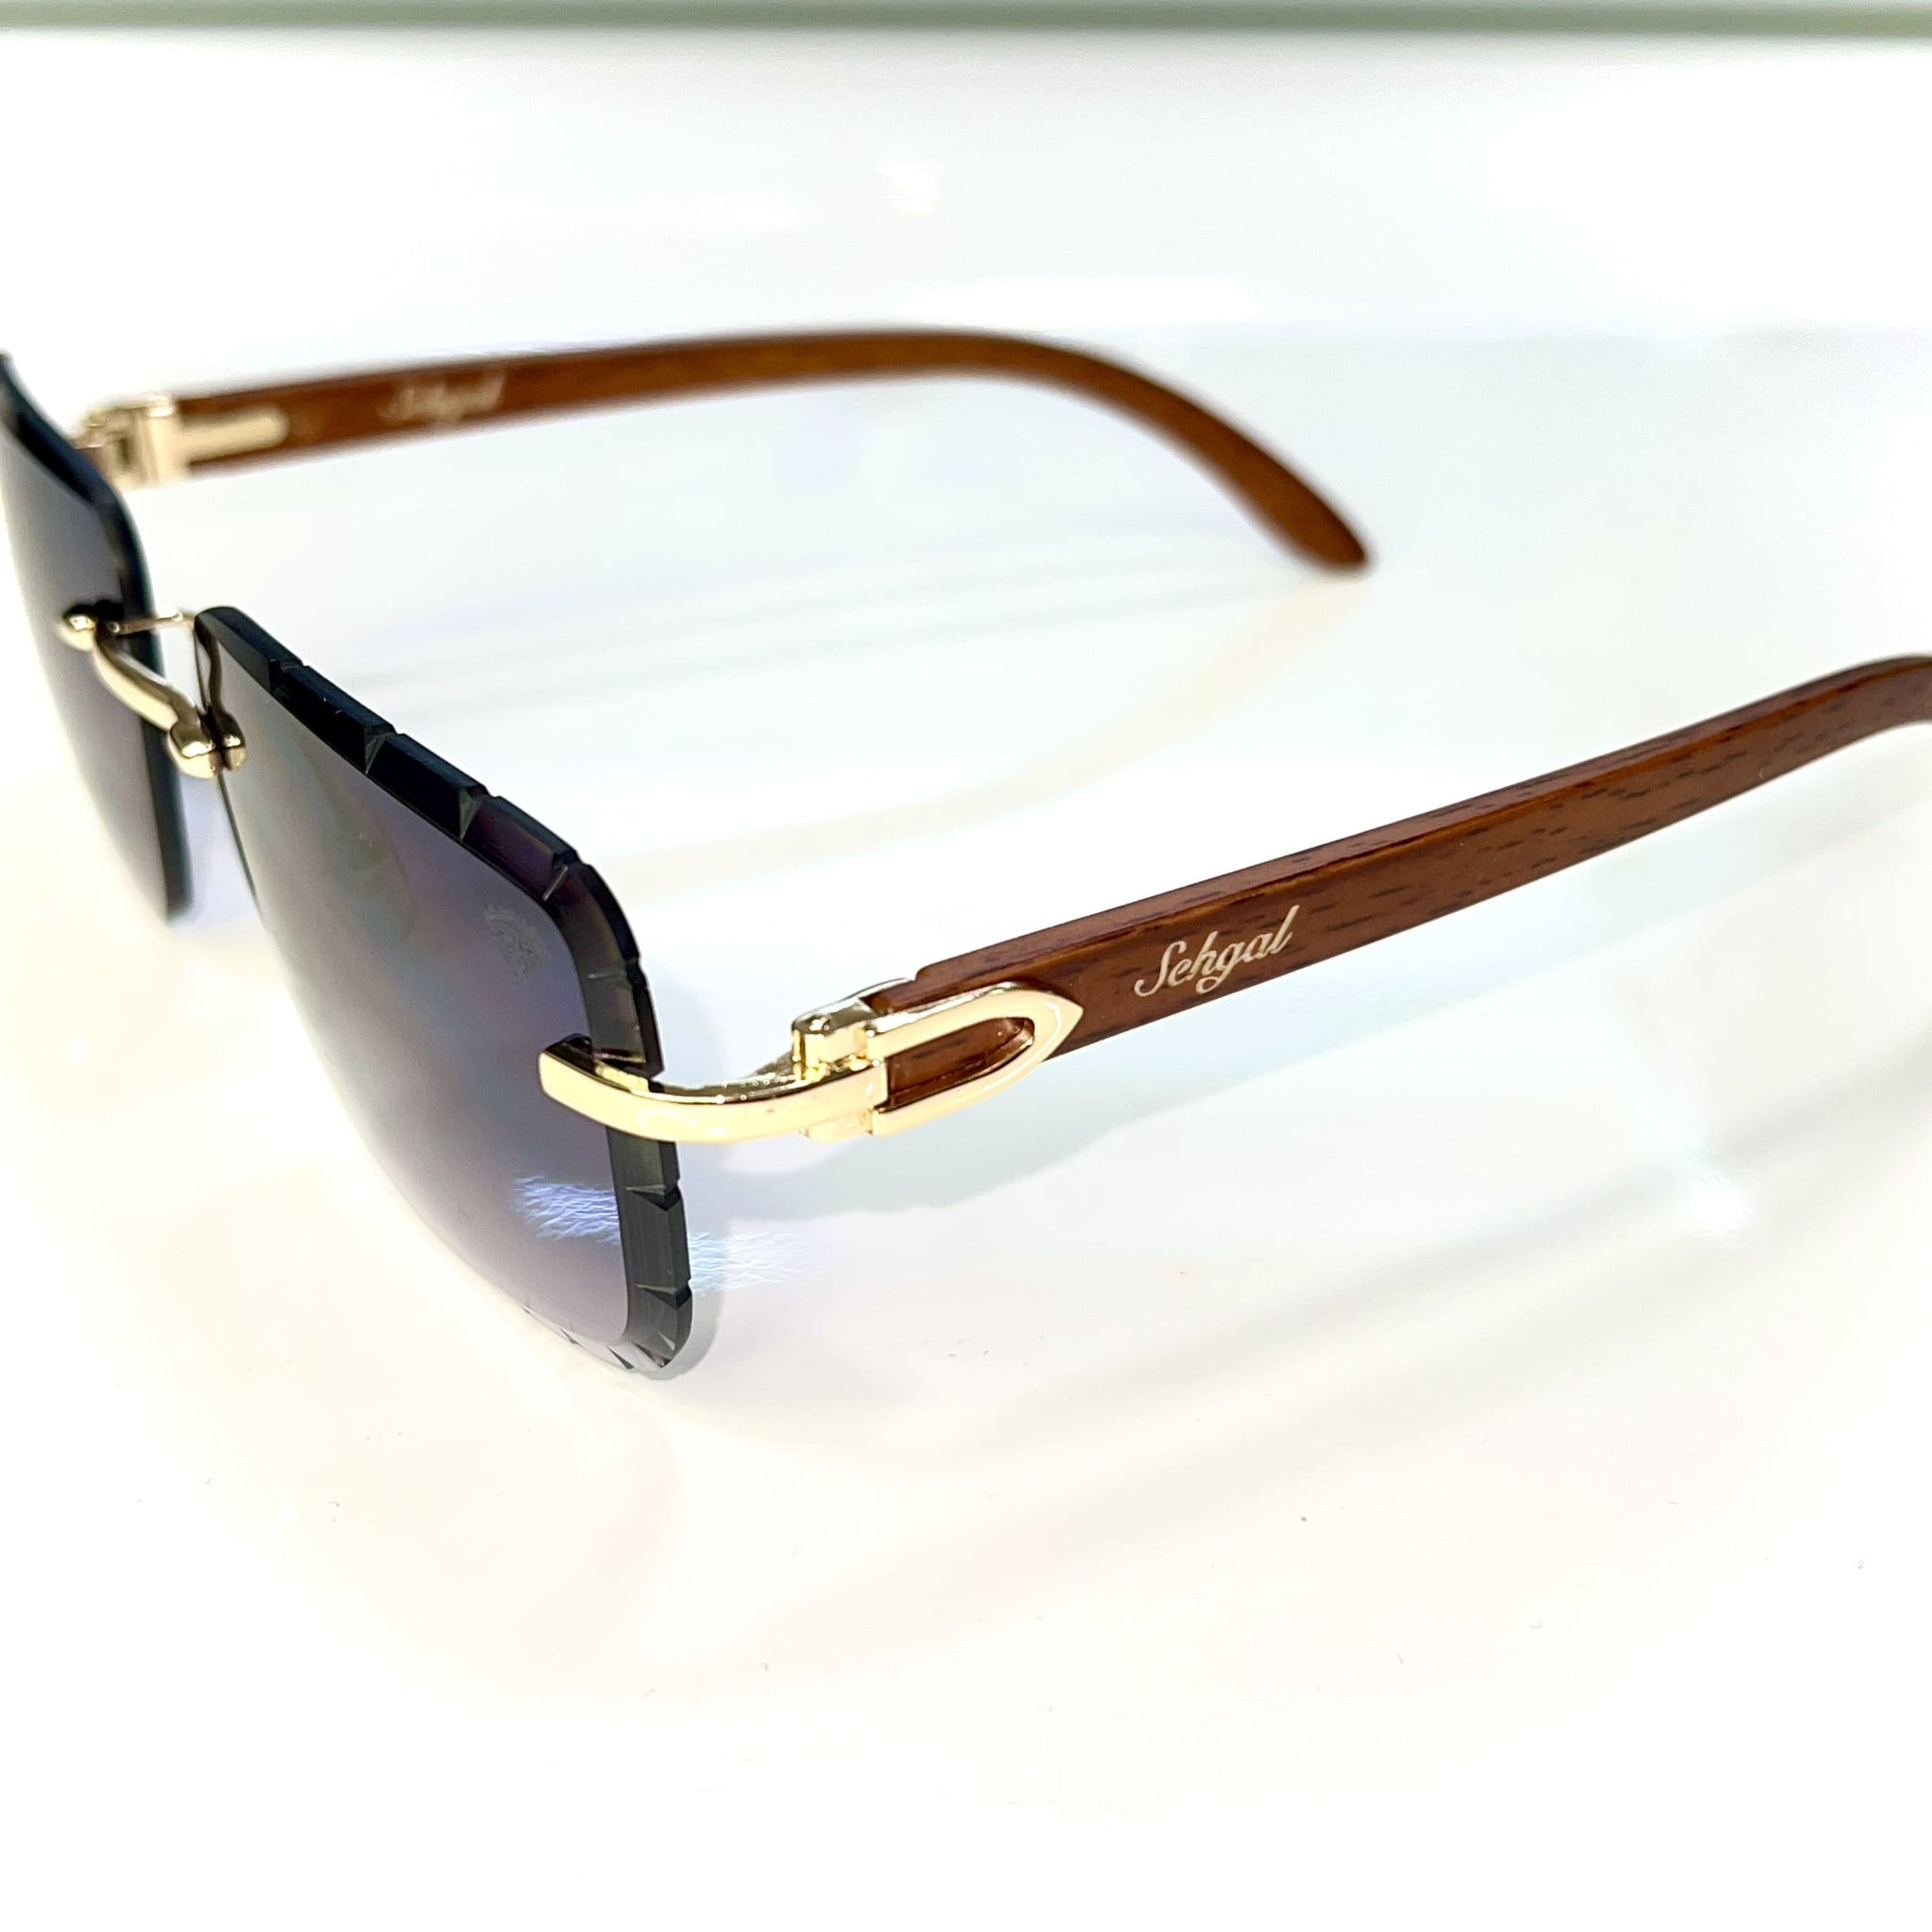 Woodcut 2.0 Glasses - Diamond cut / 14 carat gold plated / Woodgrain side - Black Shade - Sehgal Glasses